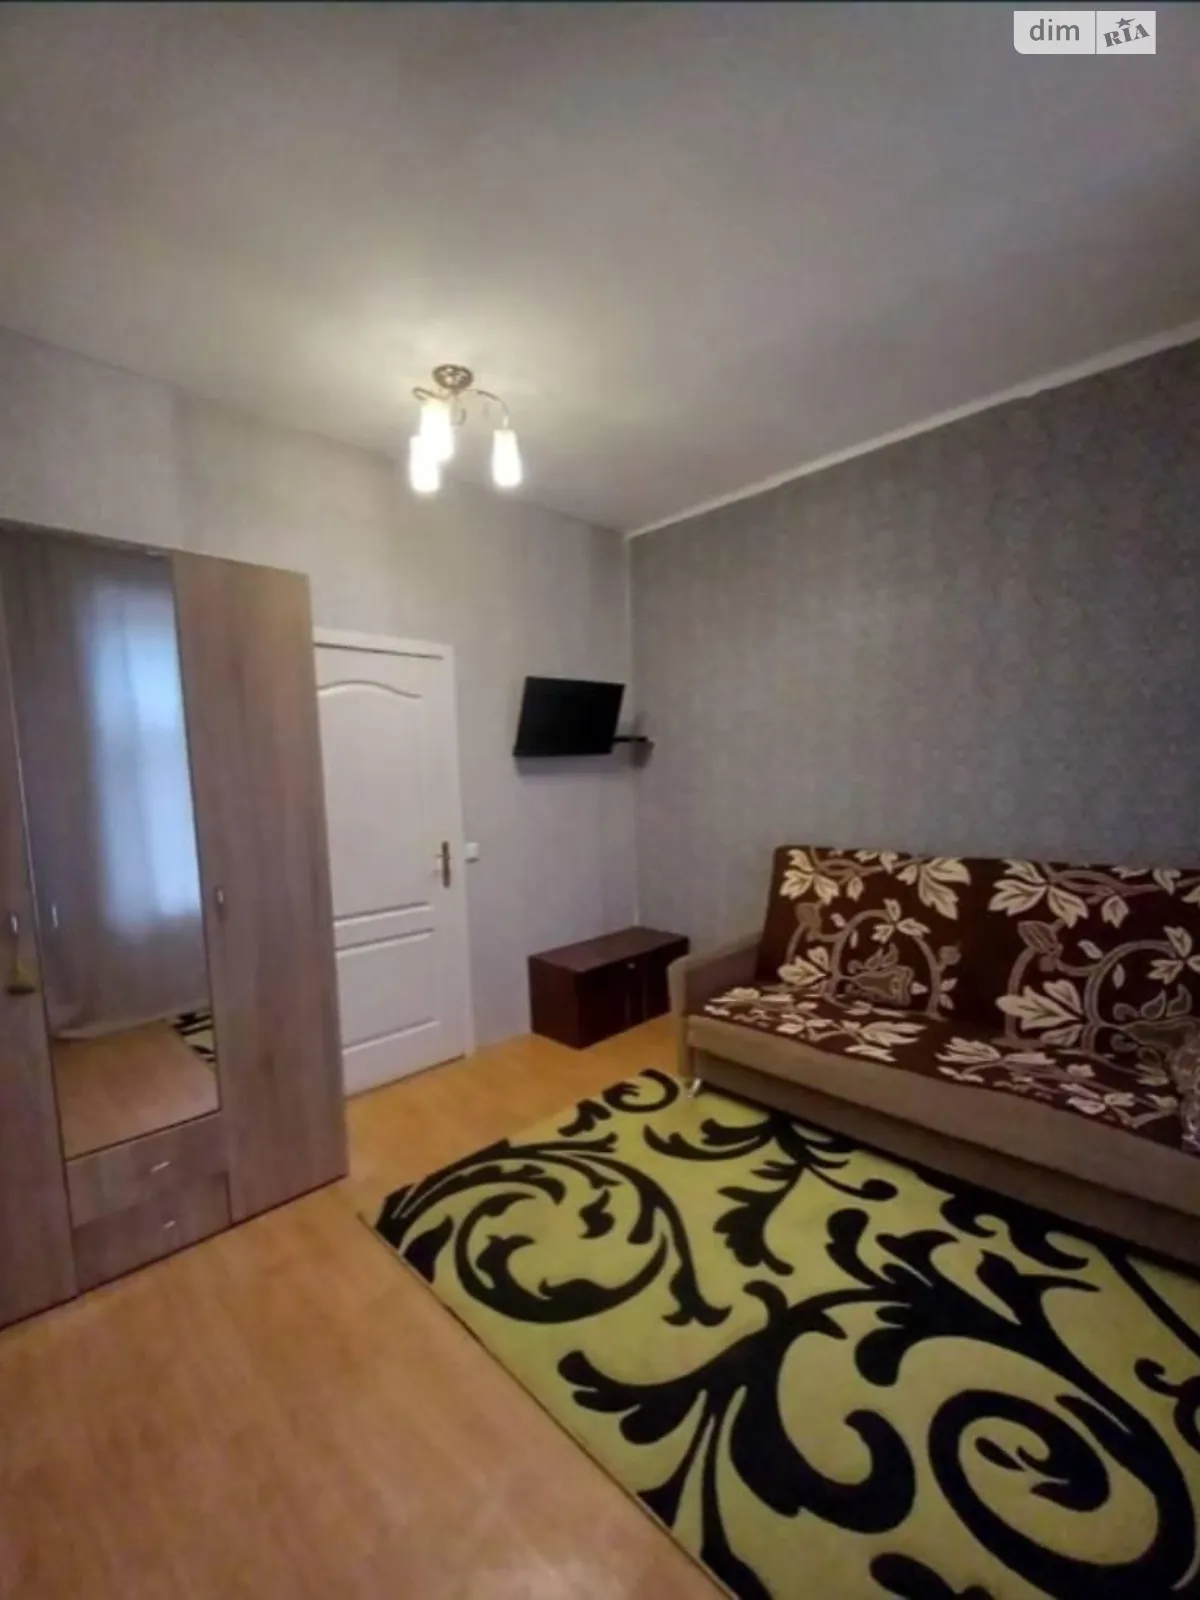 Продается комната 20 кв. м в Одессе, цена: 9500 $ - фото 1